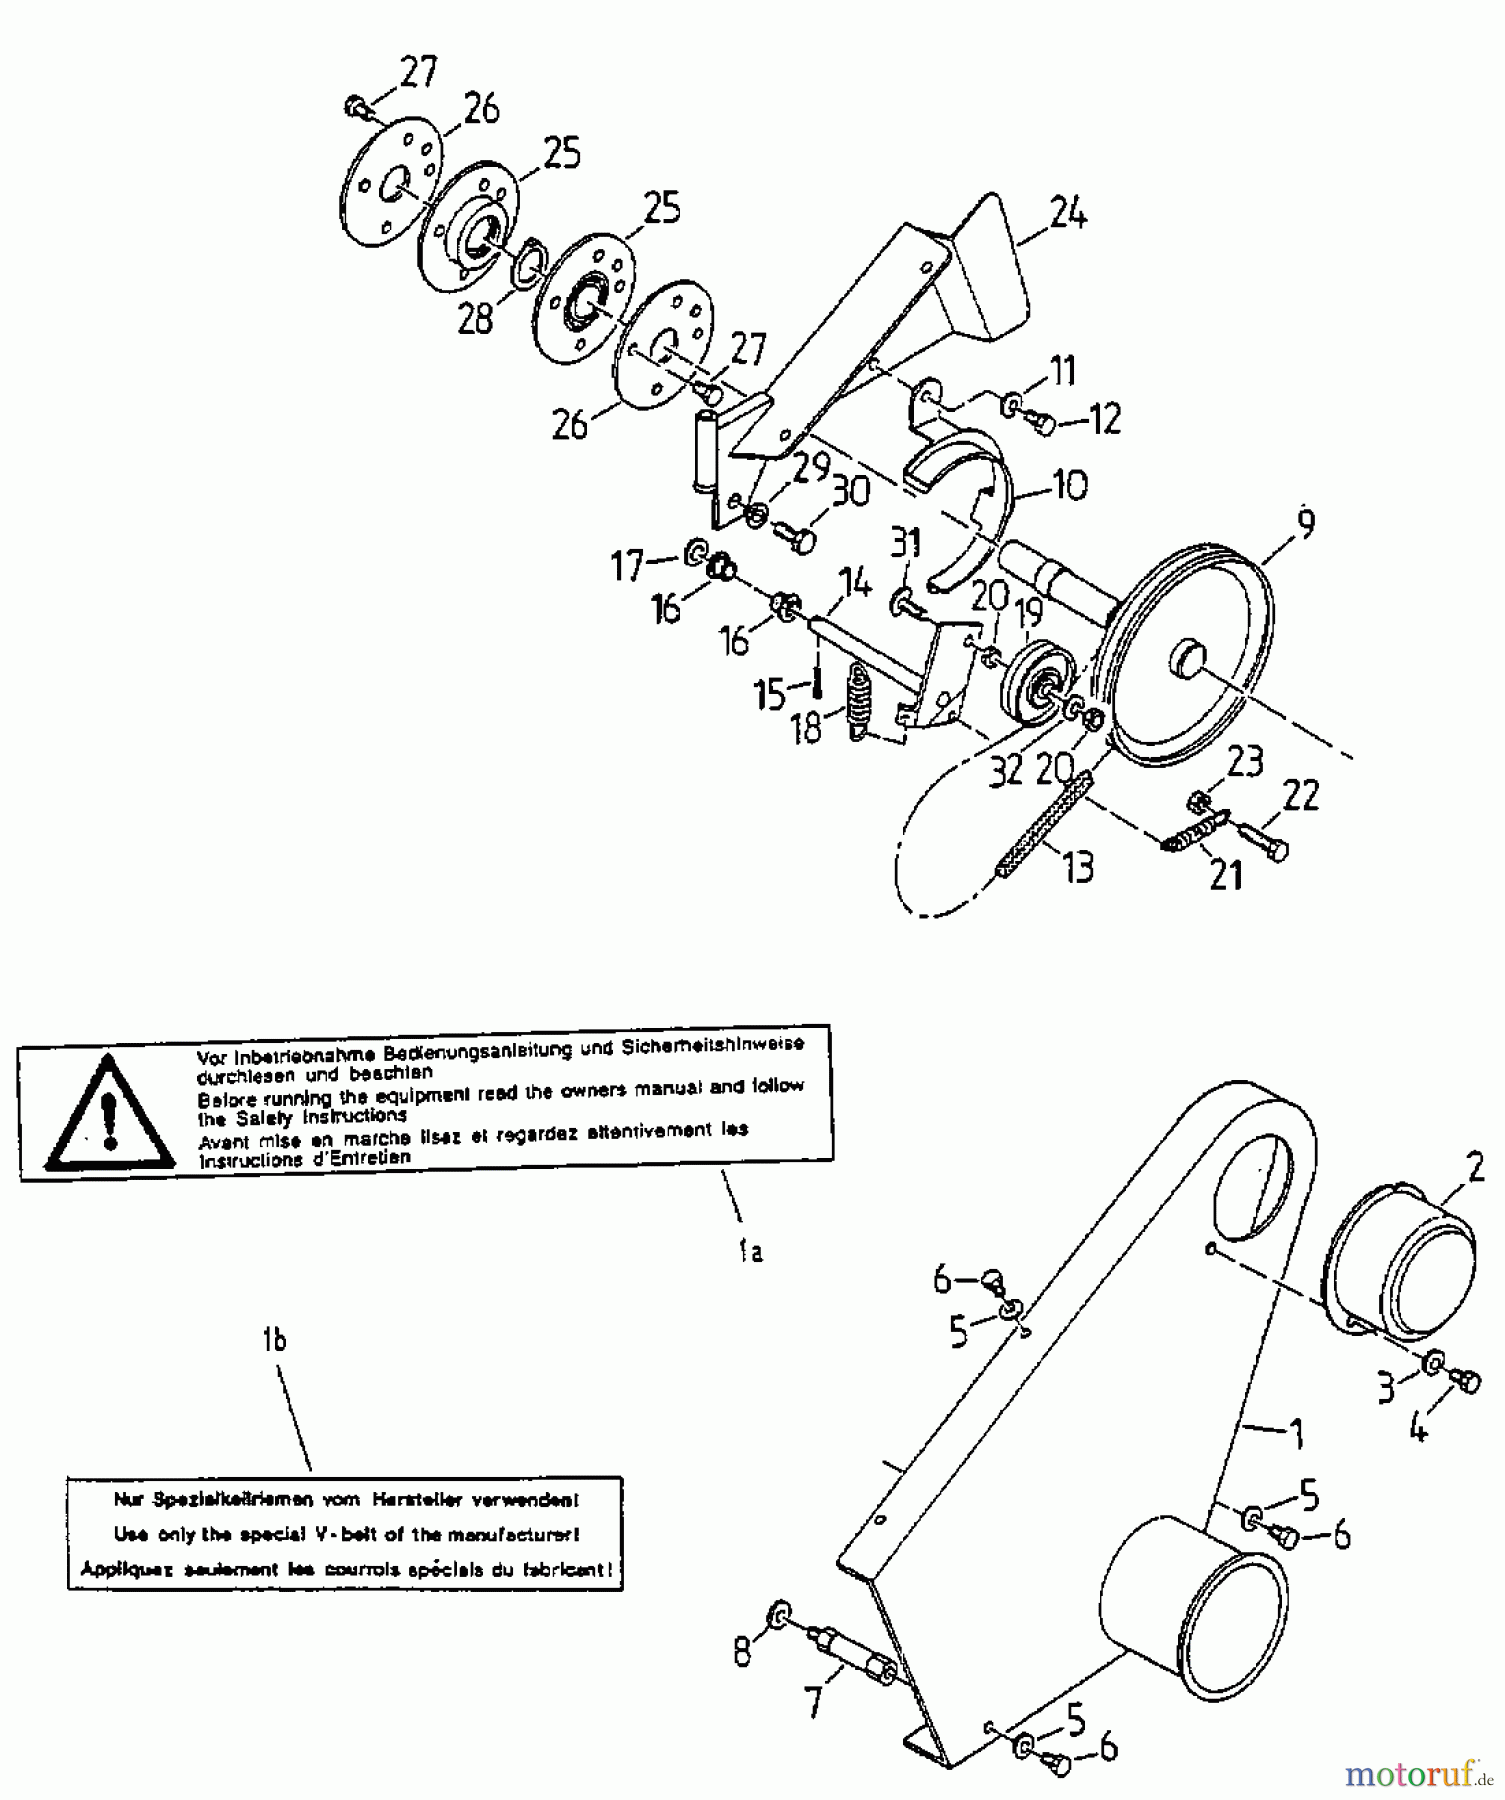  Gutbrod Cutter bar mower BM 107 07517.05  (1998) Drive system